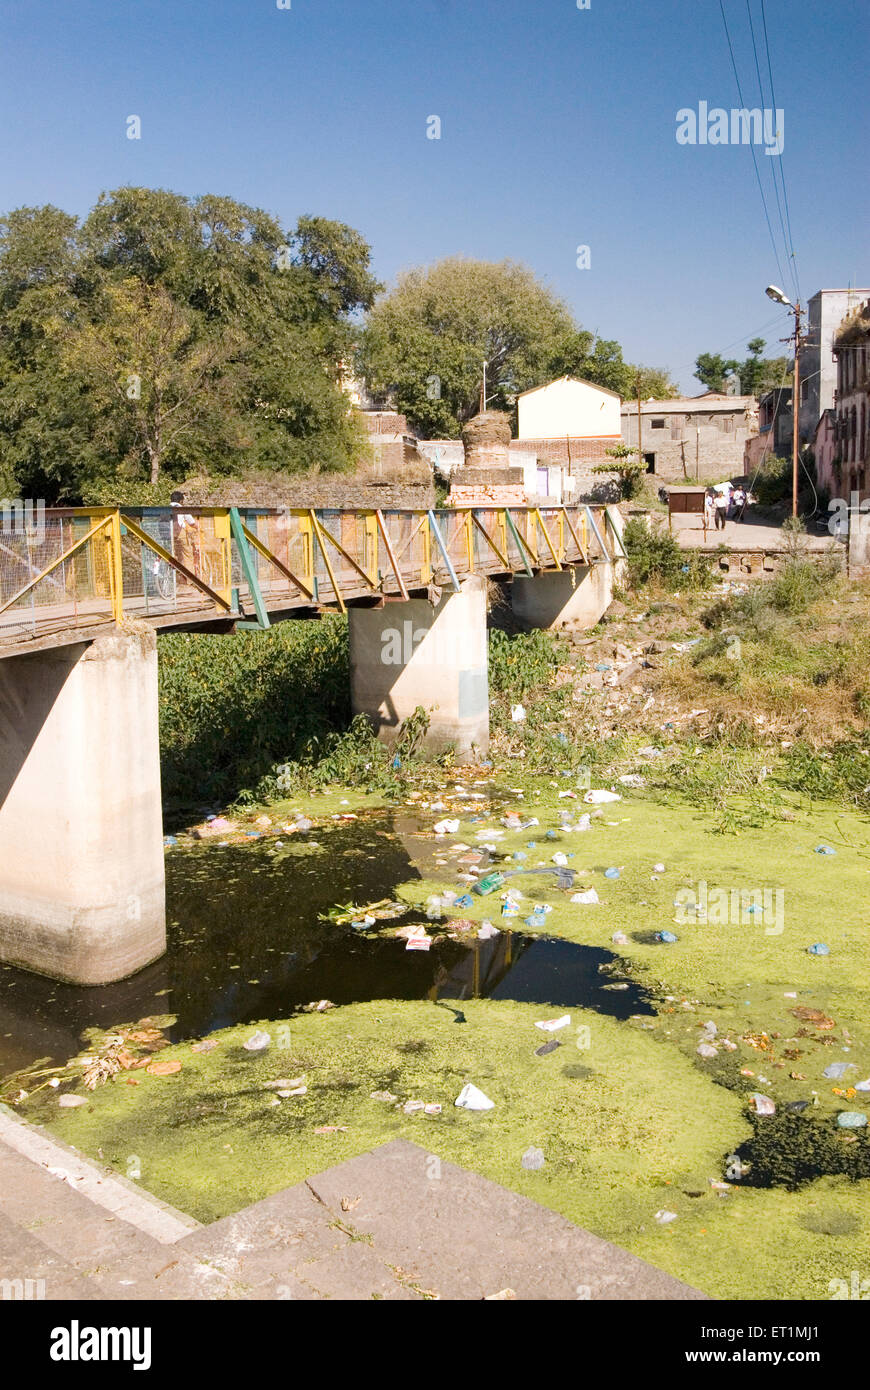 Verschmutzung Fluss in Mülldeponie Abfall im Fluss Karh bei Sasvad Dorf taluka Purandar Pune Indien Stockfoto